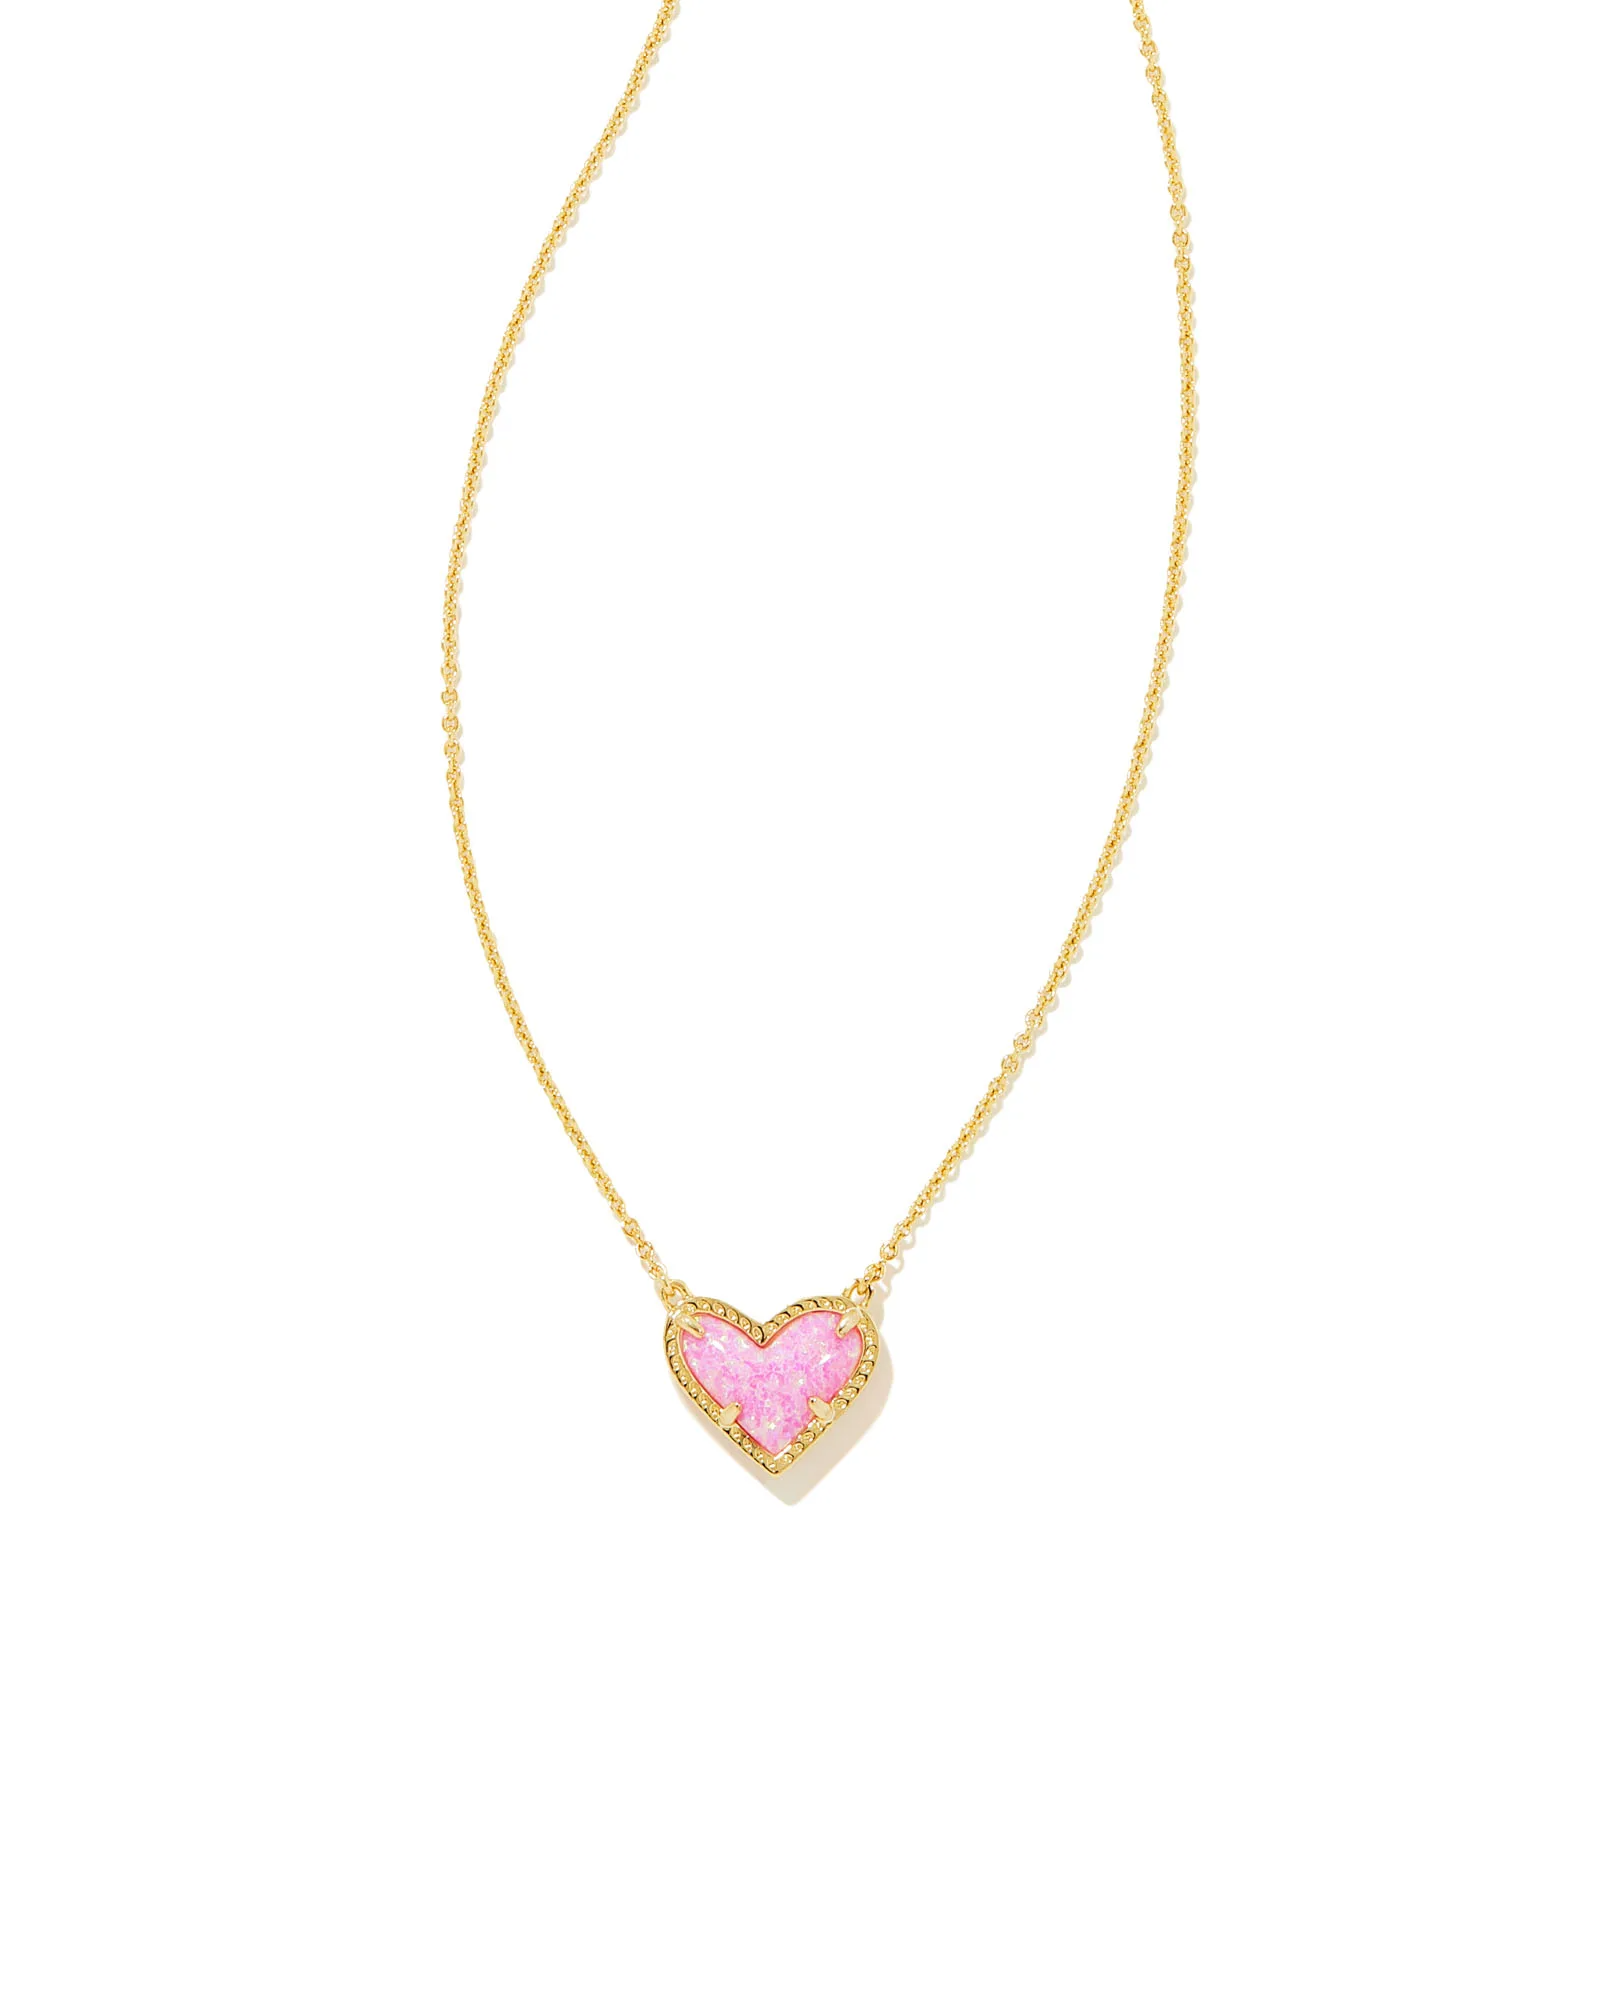 Elisa Gold Pendant Necklace in Orange Opaque Glass | Kendra Scott | Orange  jewelry, Gold pendant necklace, Preppy jewelry